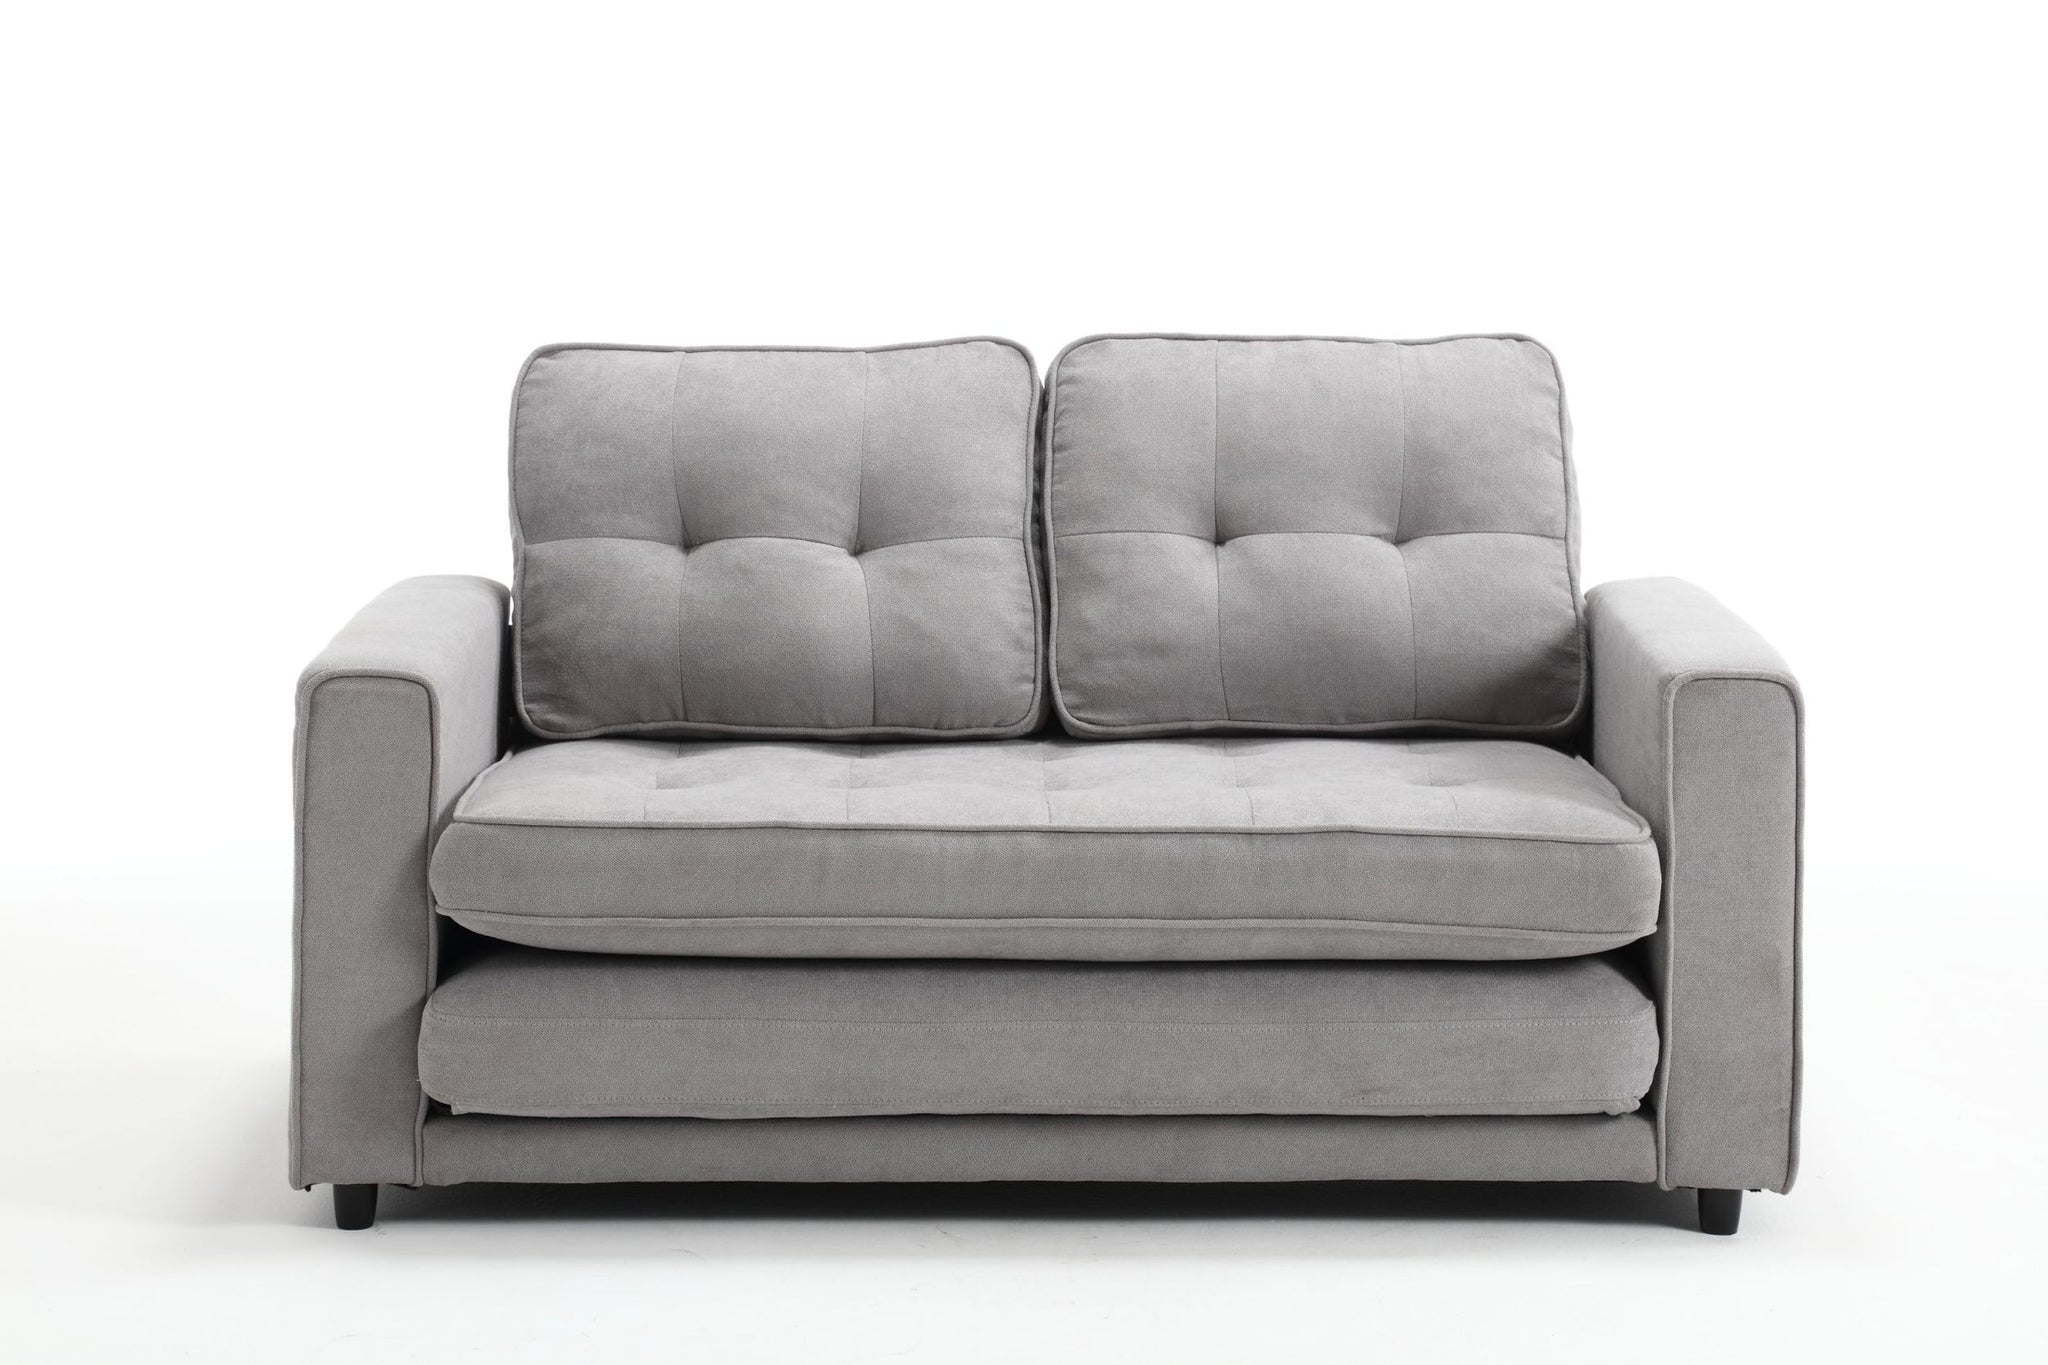 3 Fold Sofa,Convertible Futon Couch sleeper light gray-velvet-wood-primary living